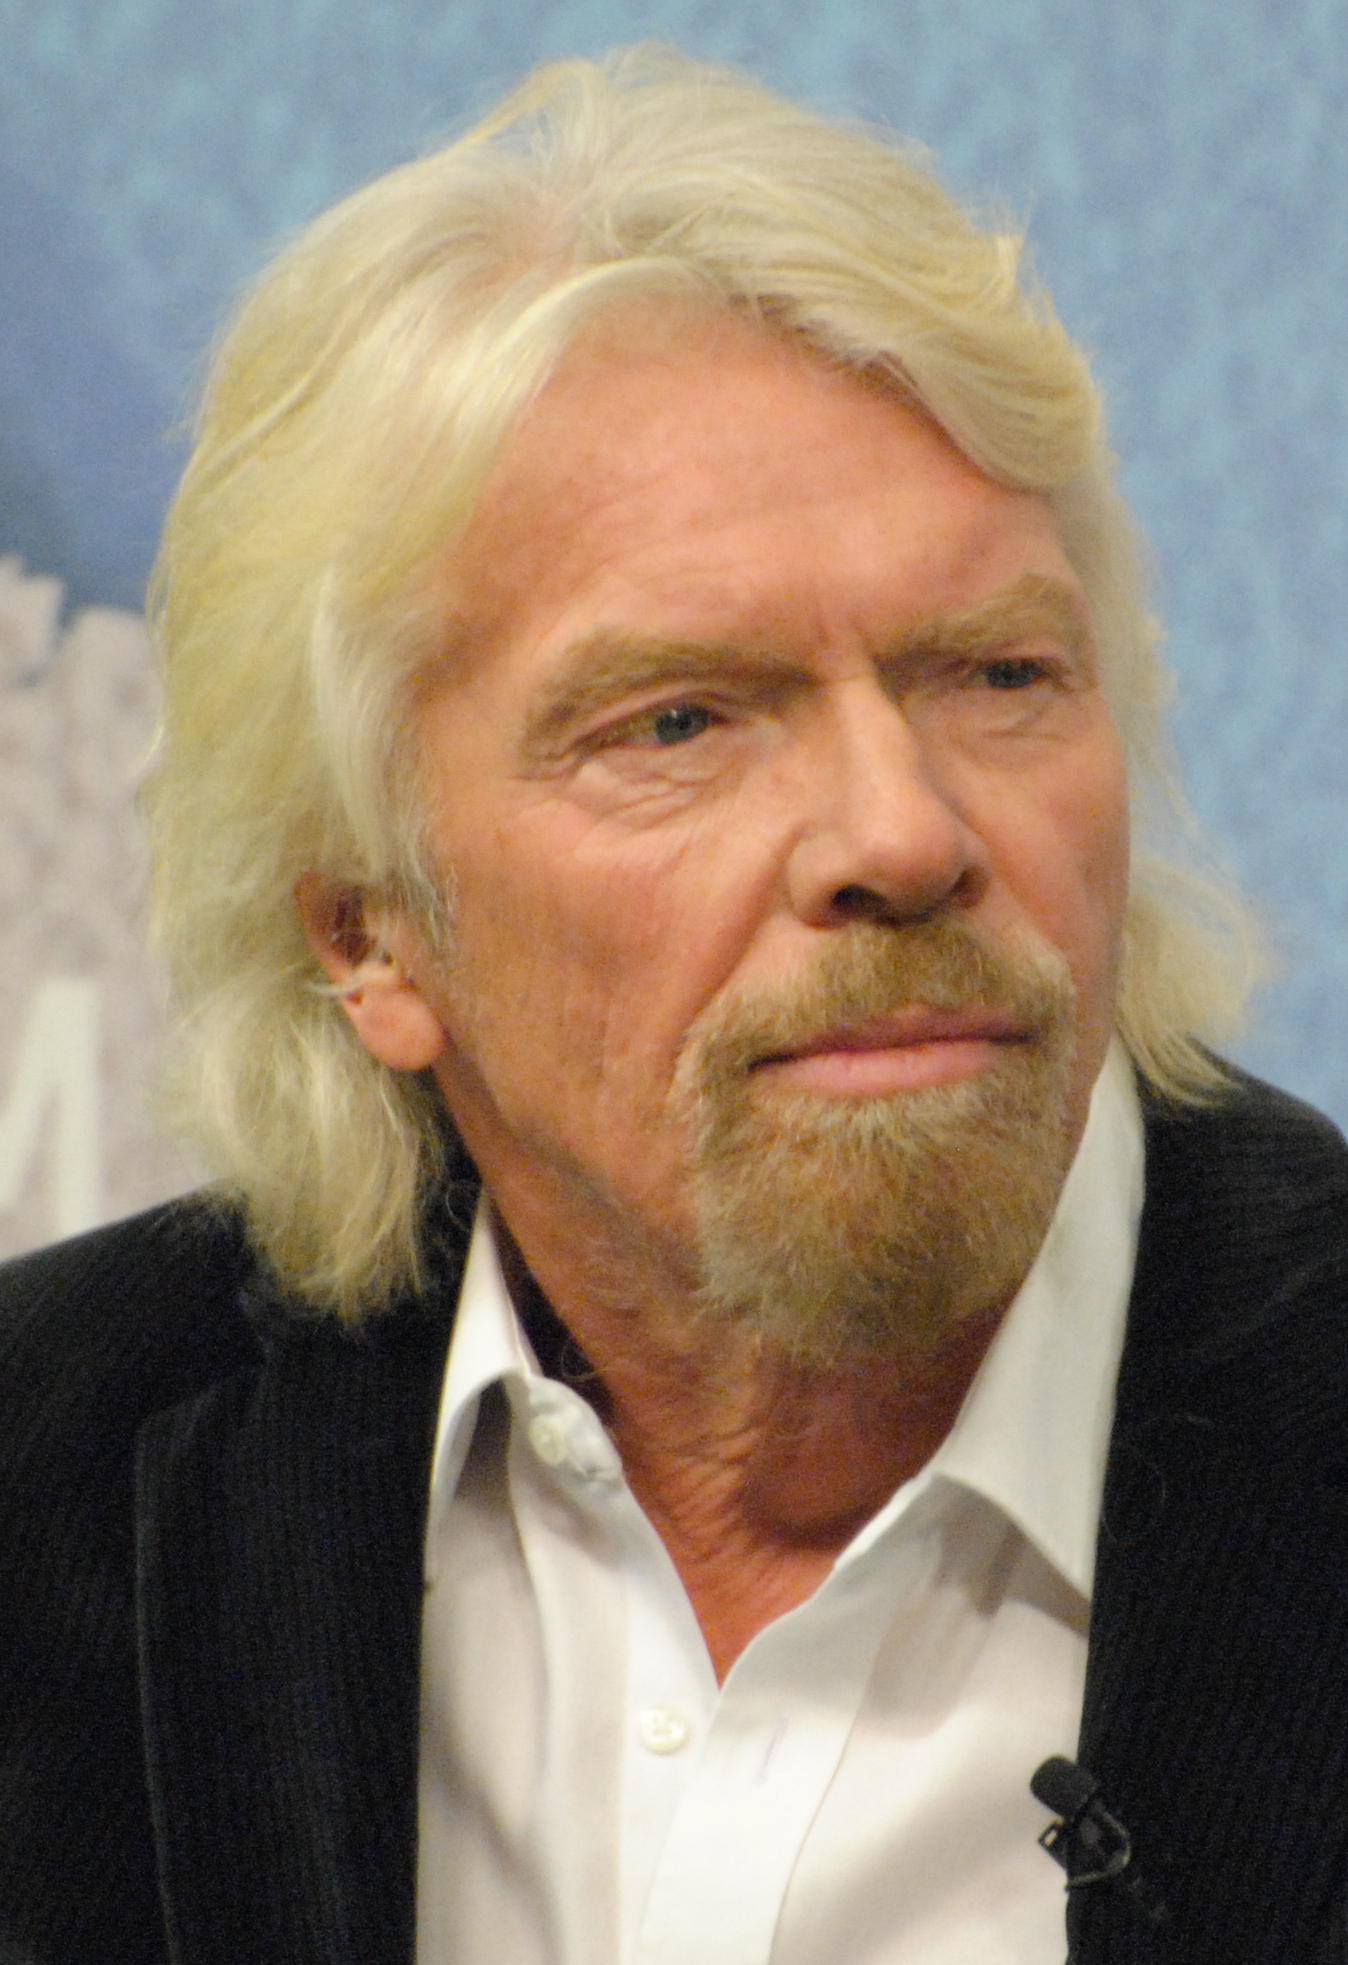 Richard Branson: A Man of Many Ventures